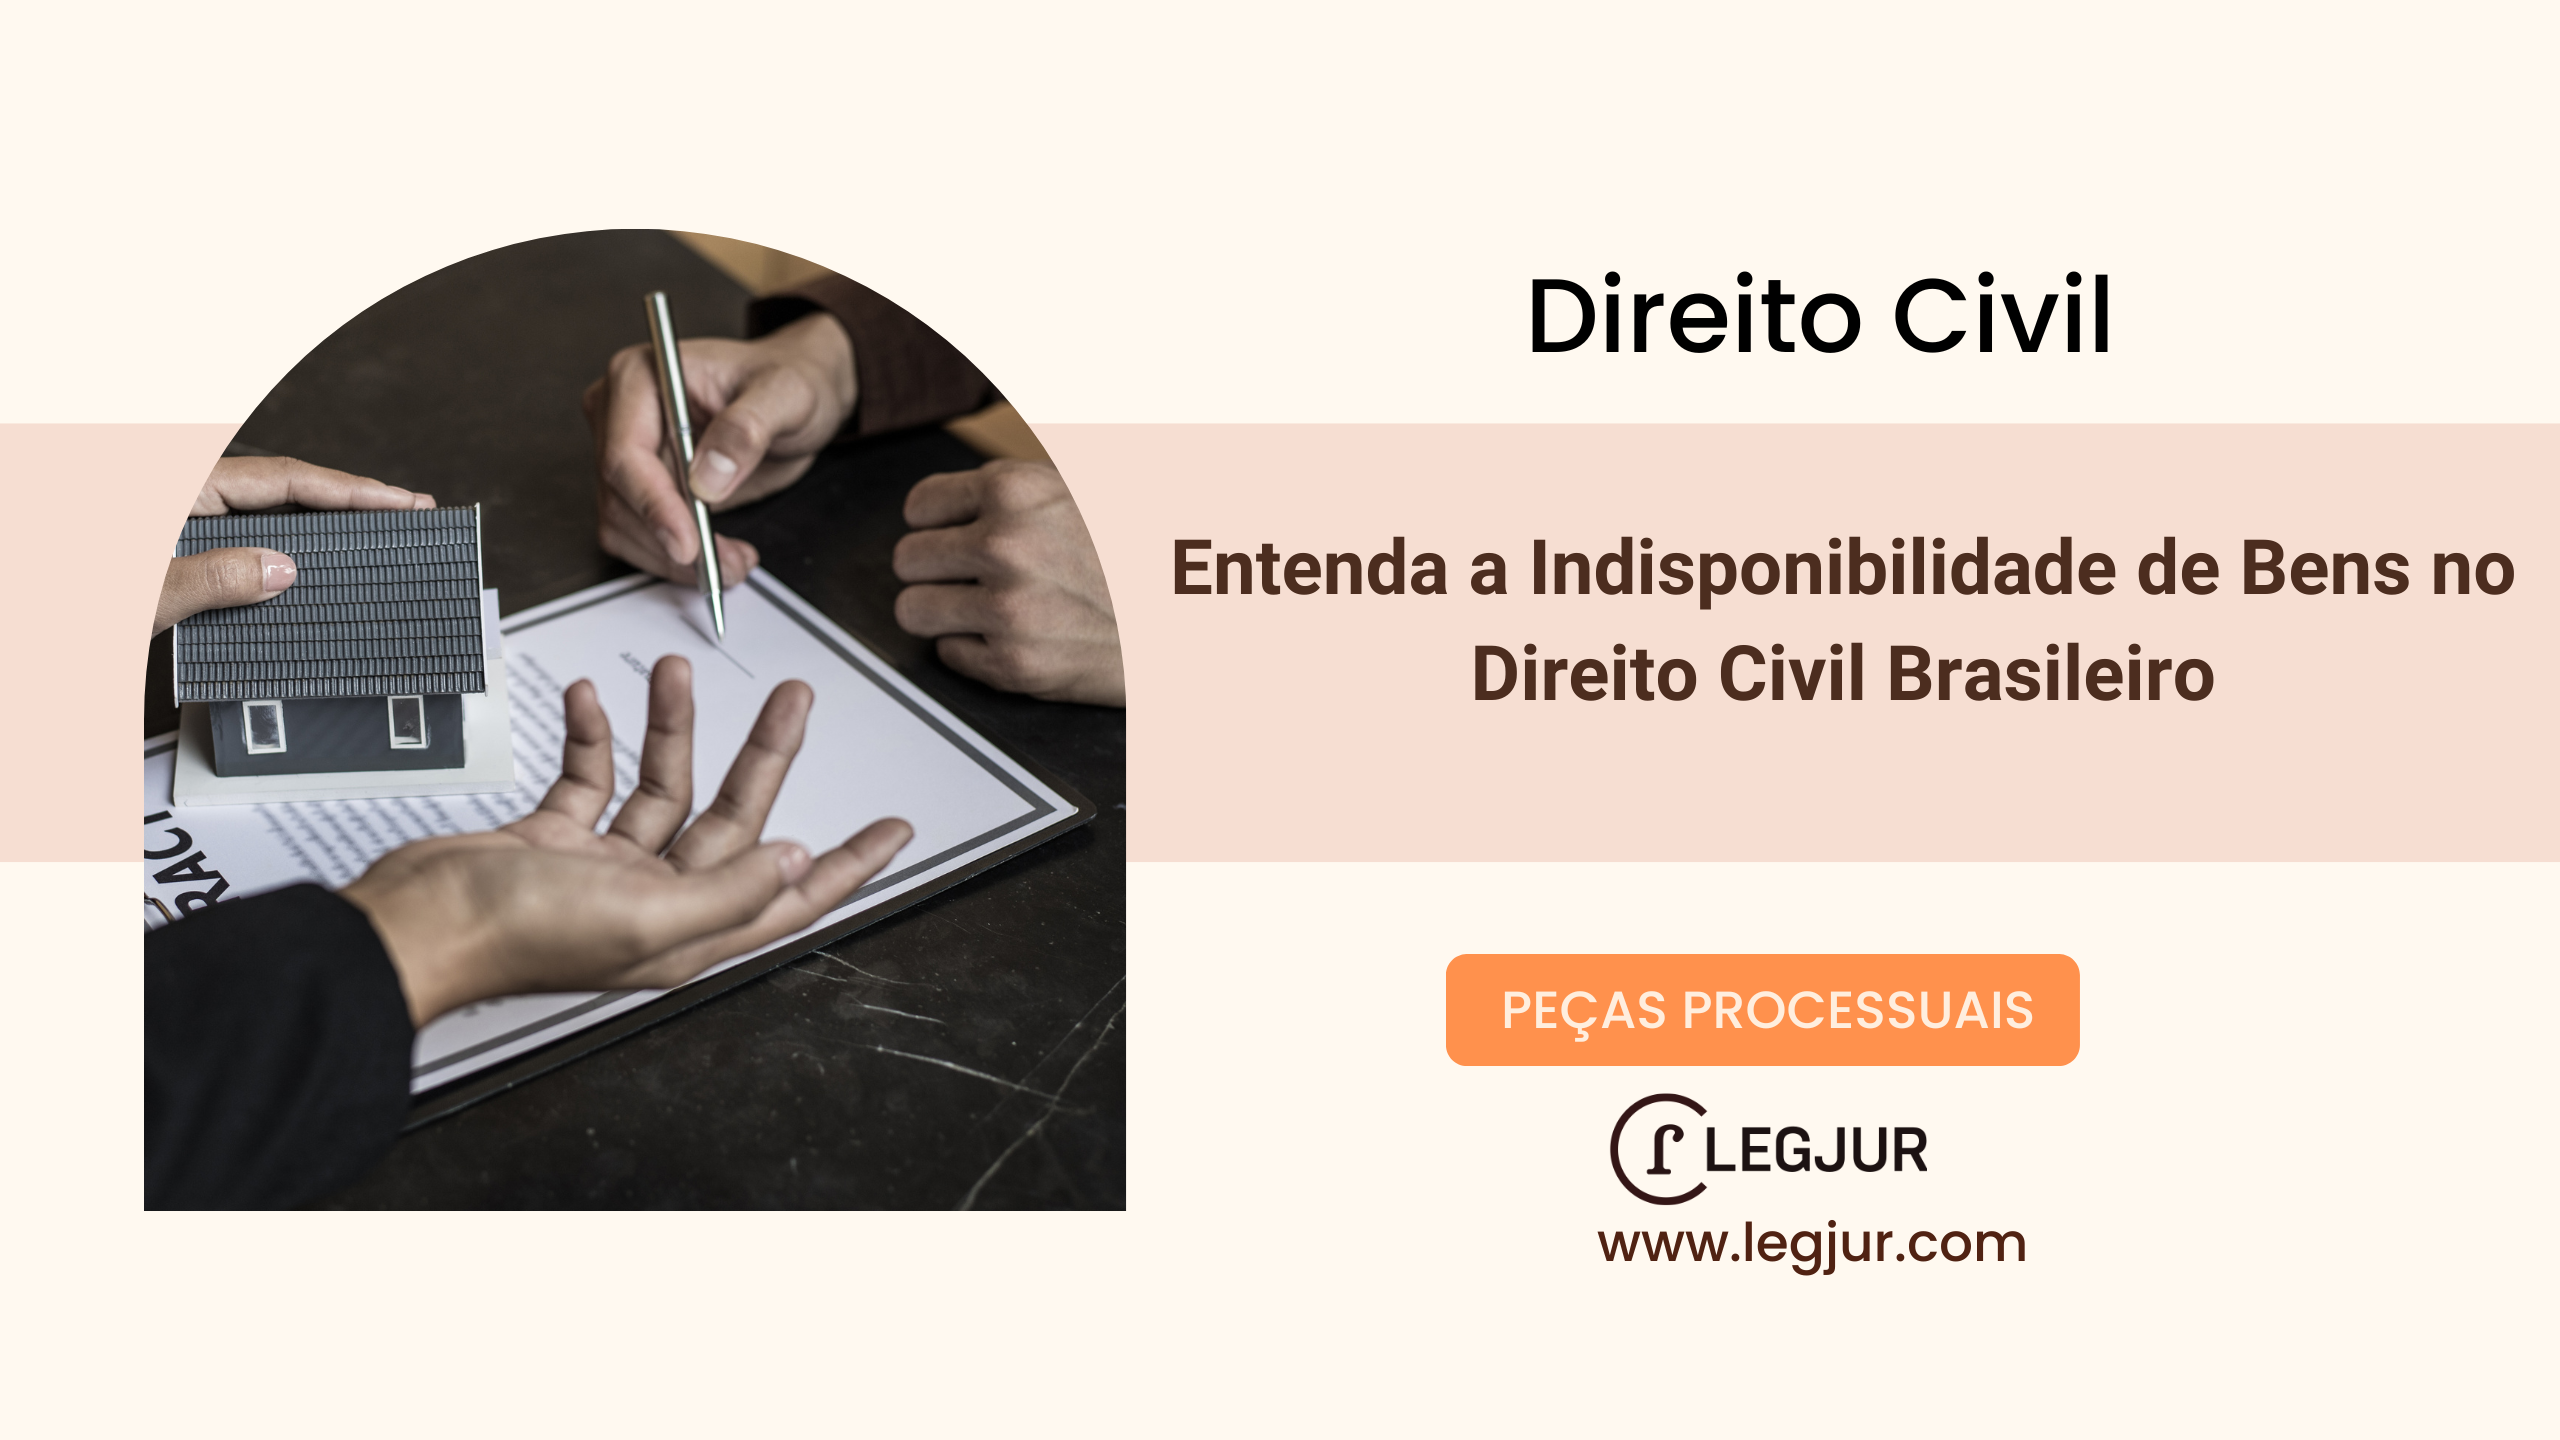 Entenda a Indisponibilidade de Bens no Direito Civil Brasileiro